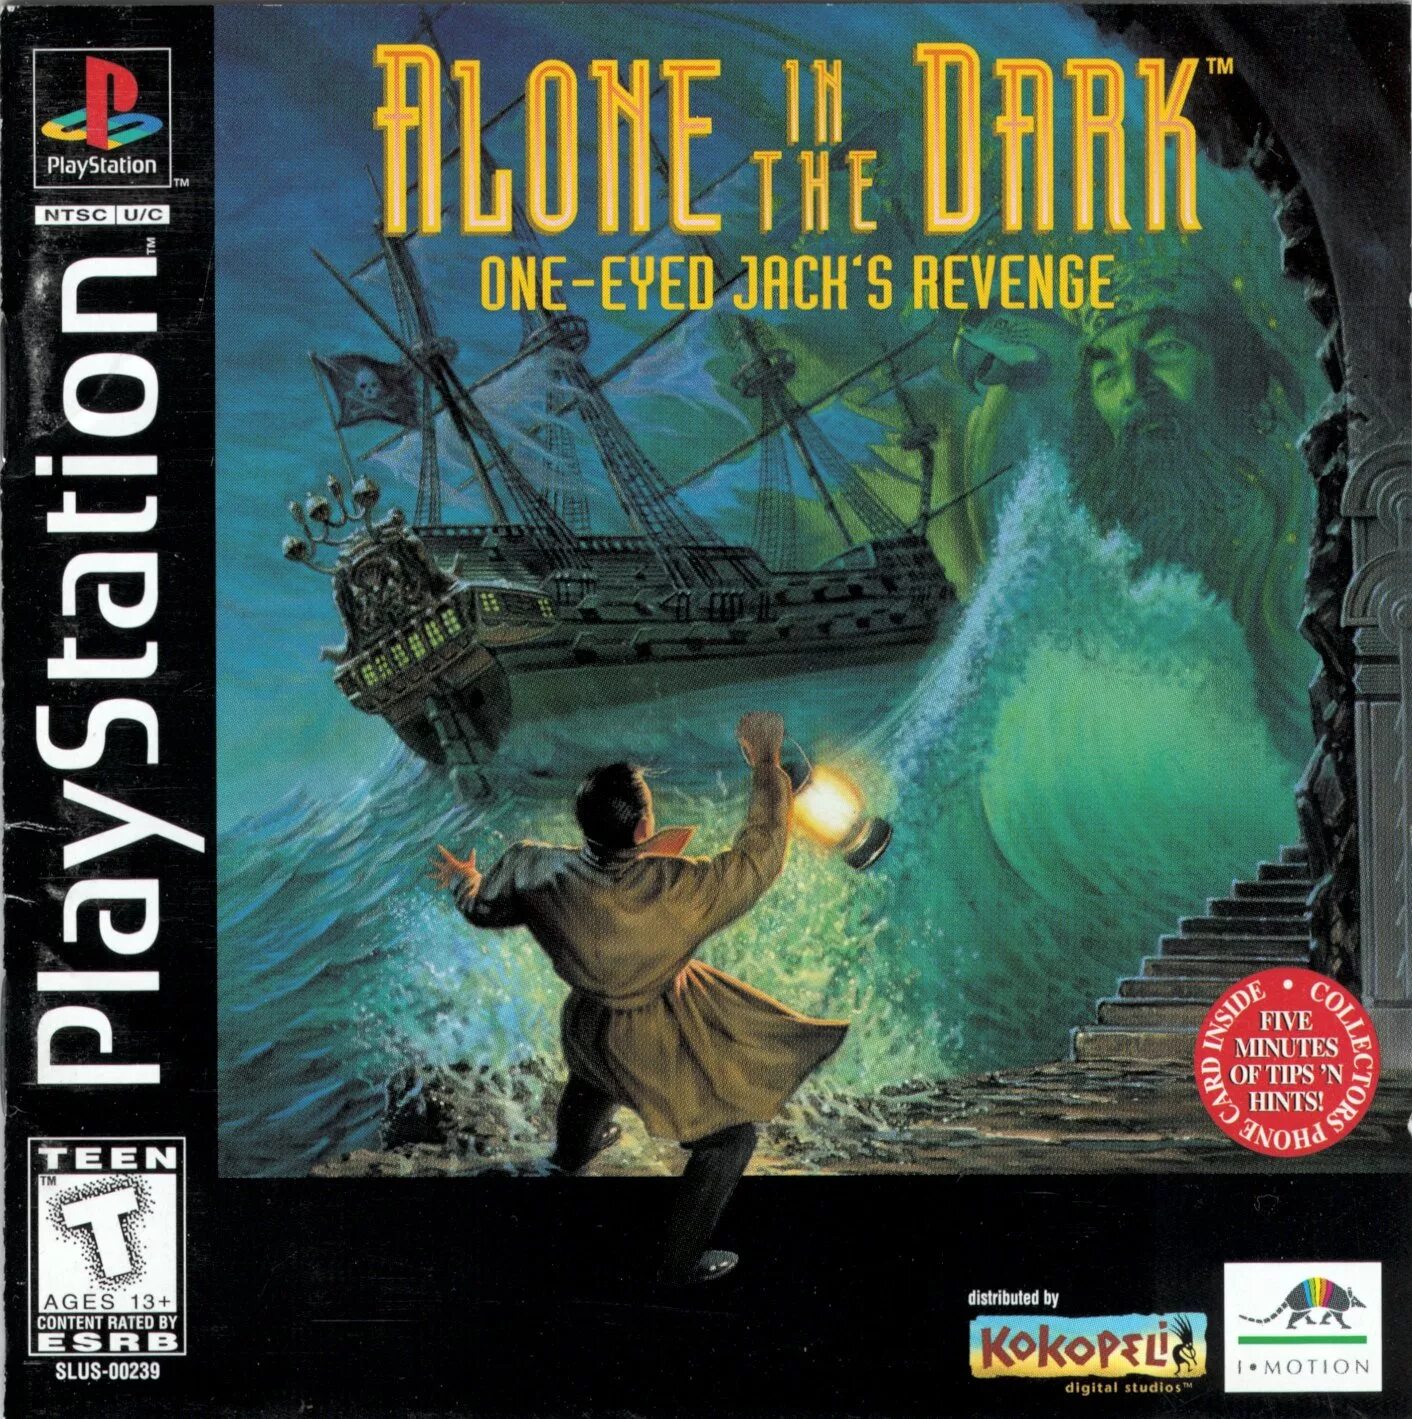 Alone in the dark 1. Alone in the Dark 2: one-eyed Jacks Revenge. Alone in the Dark 2 - one-eyed Jack's Revenge ps1 обложка. Alone in the Dark 2 ps1. Alone in the Dark 1992 ps1.